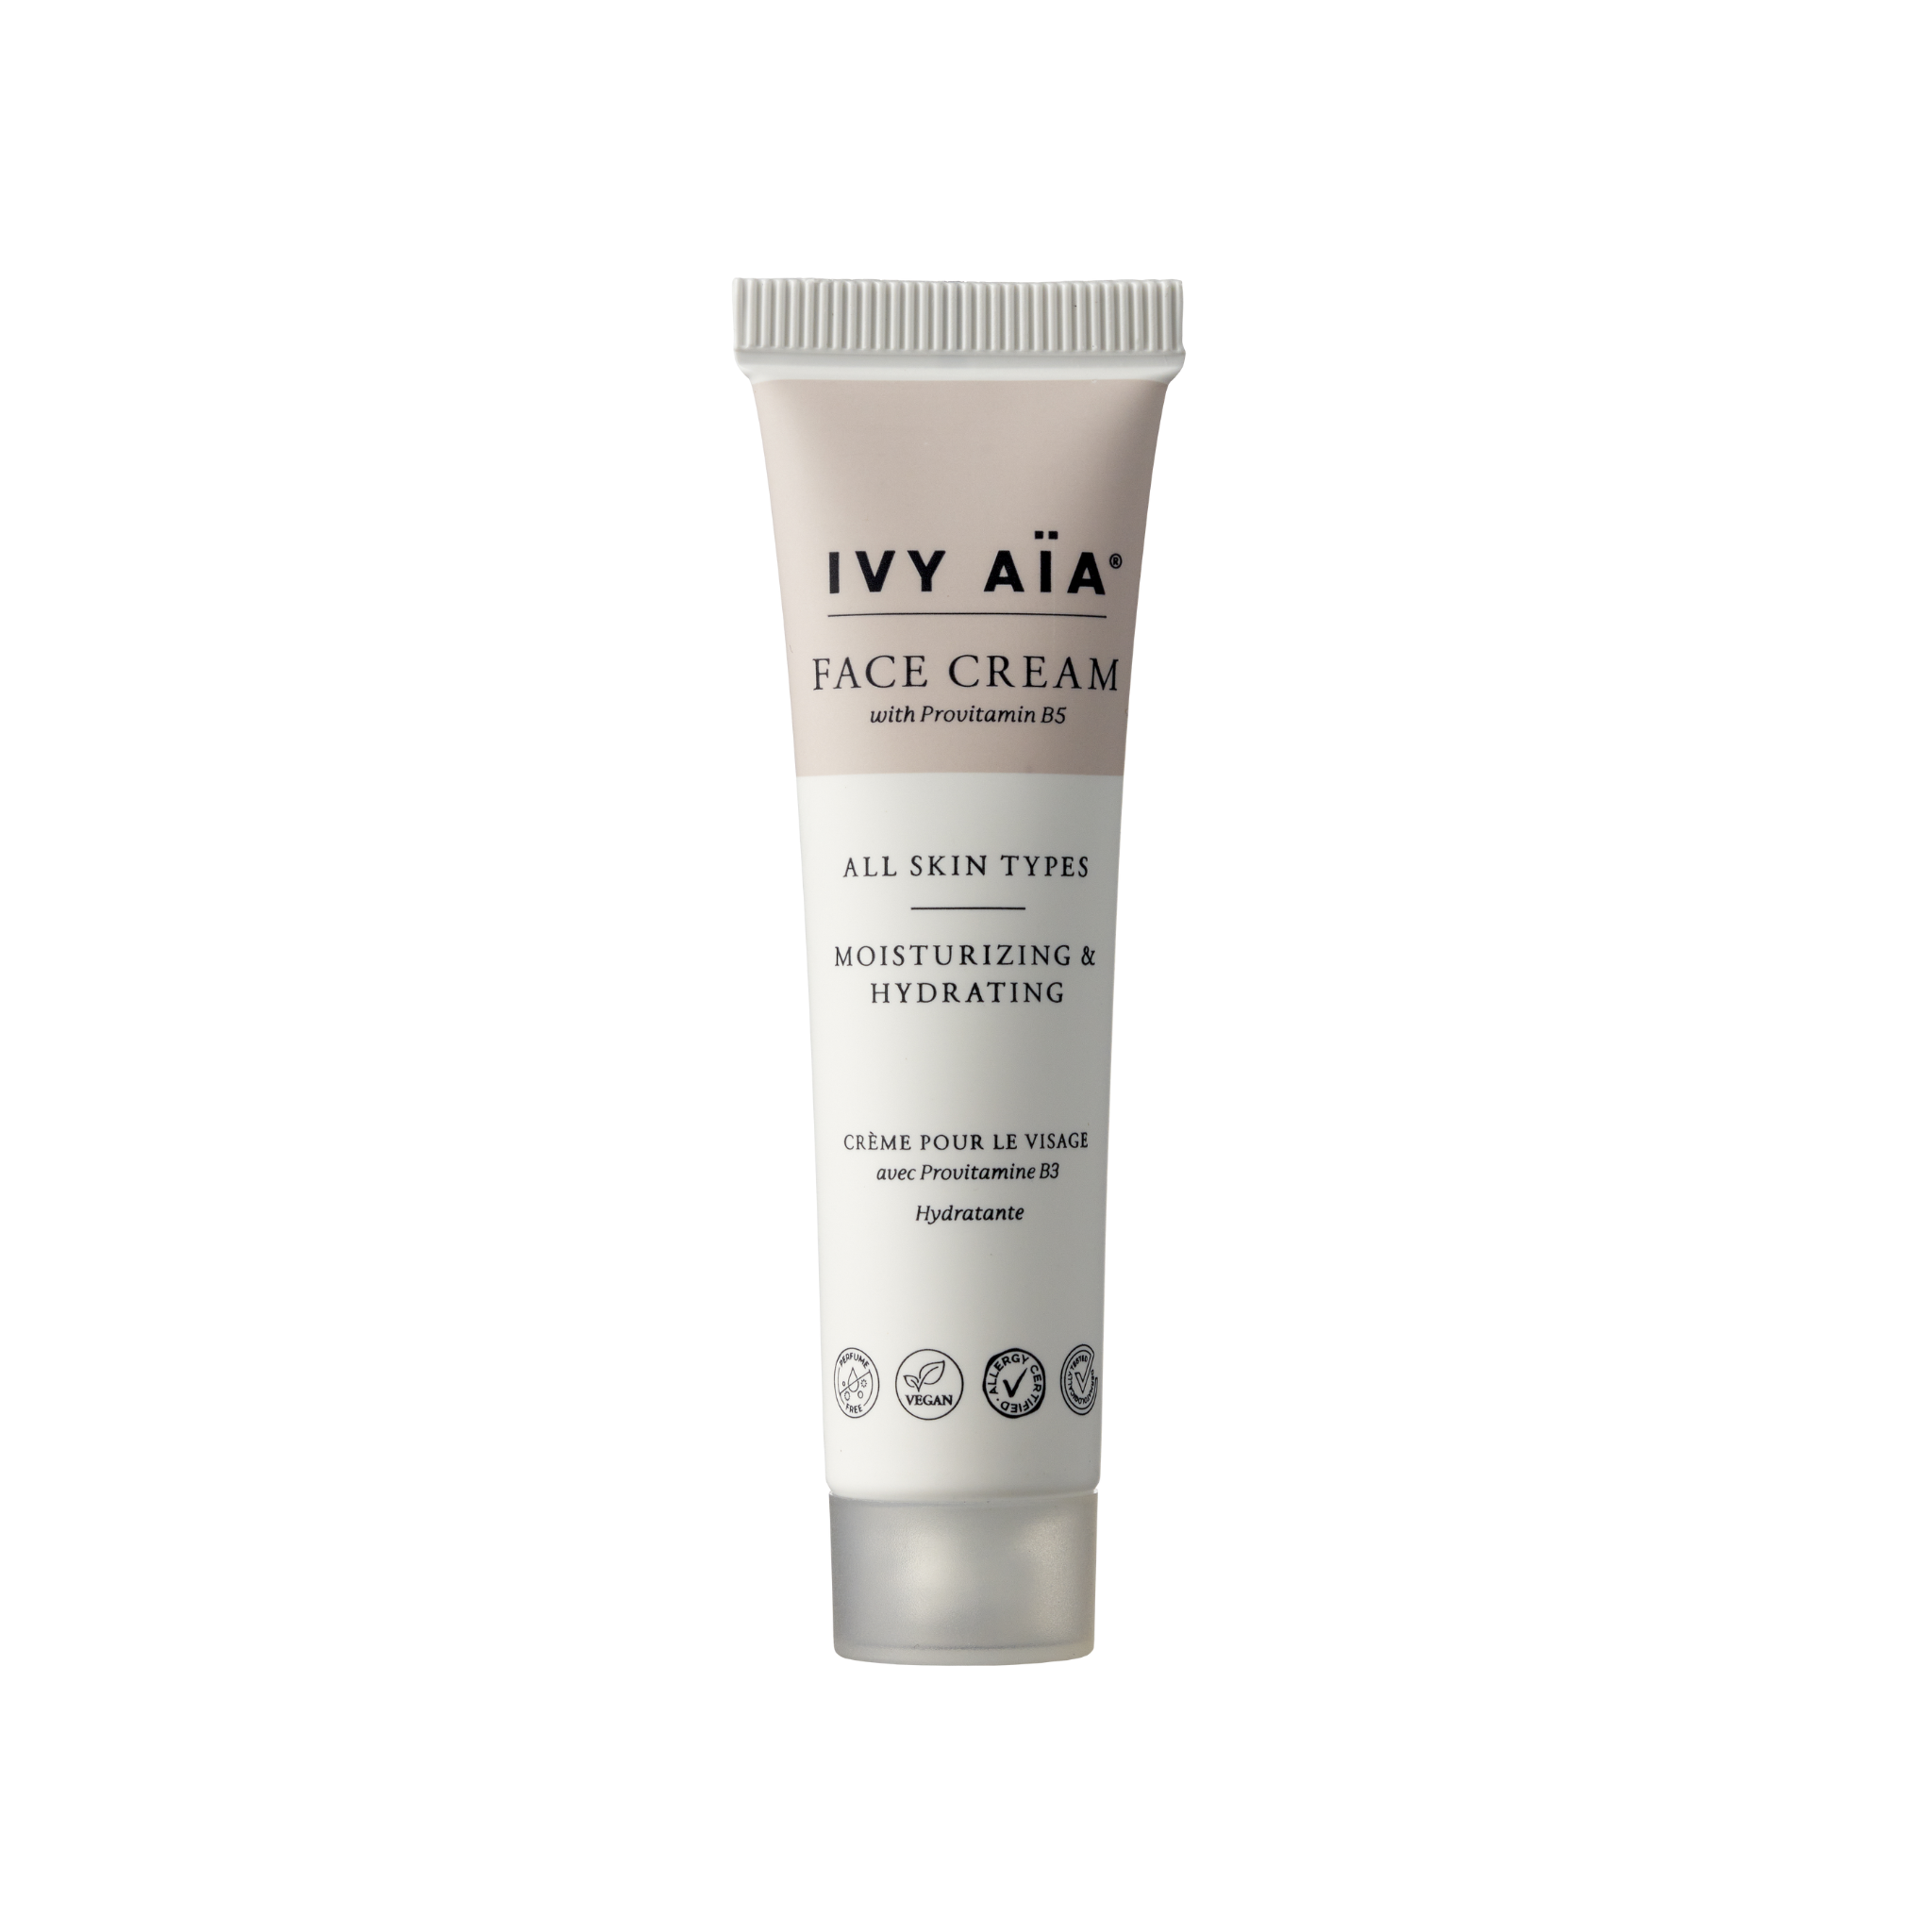 Ivy Aïa Face Cream, Travel Size